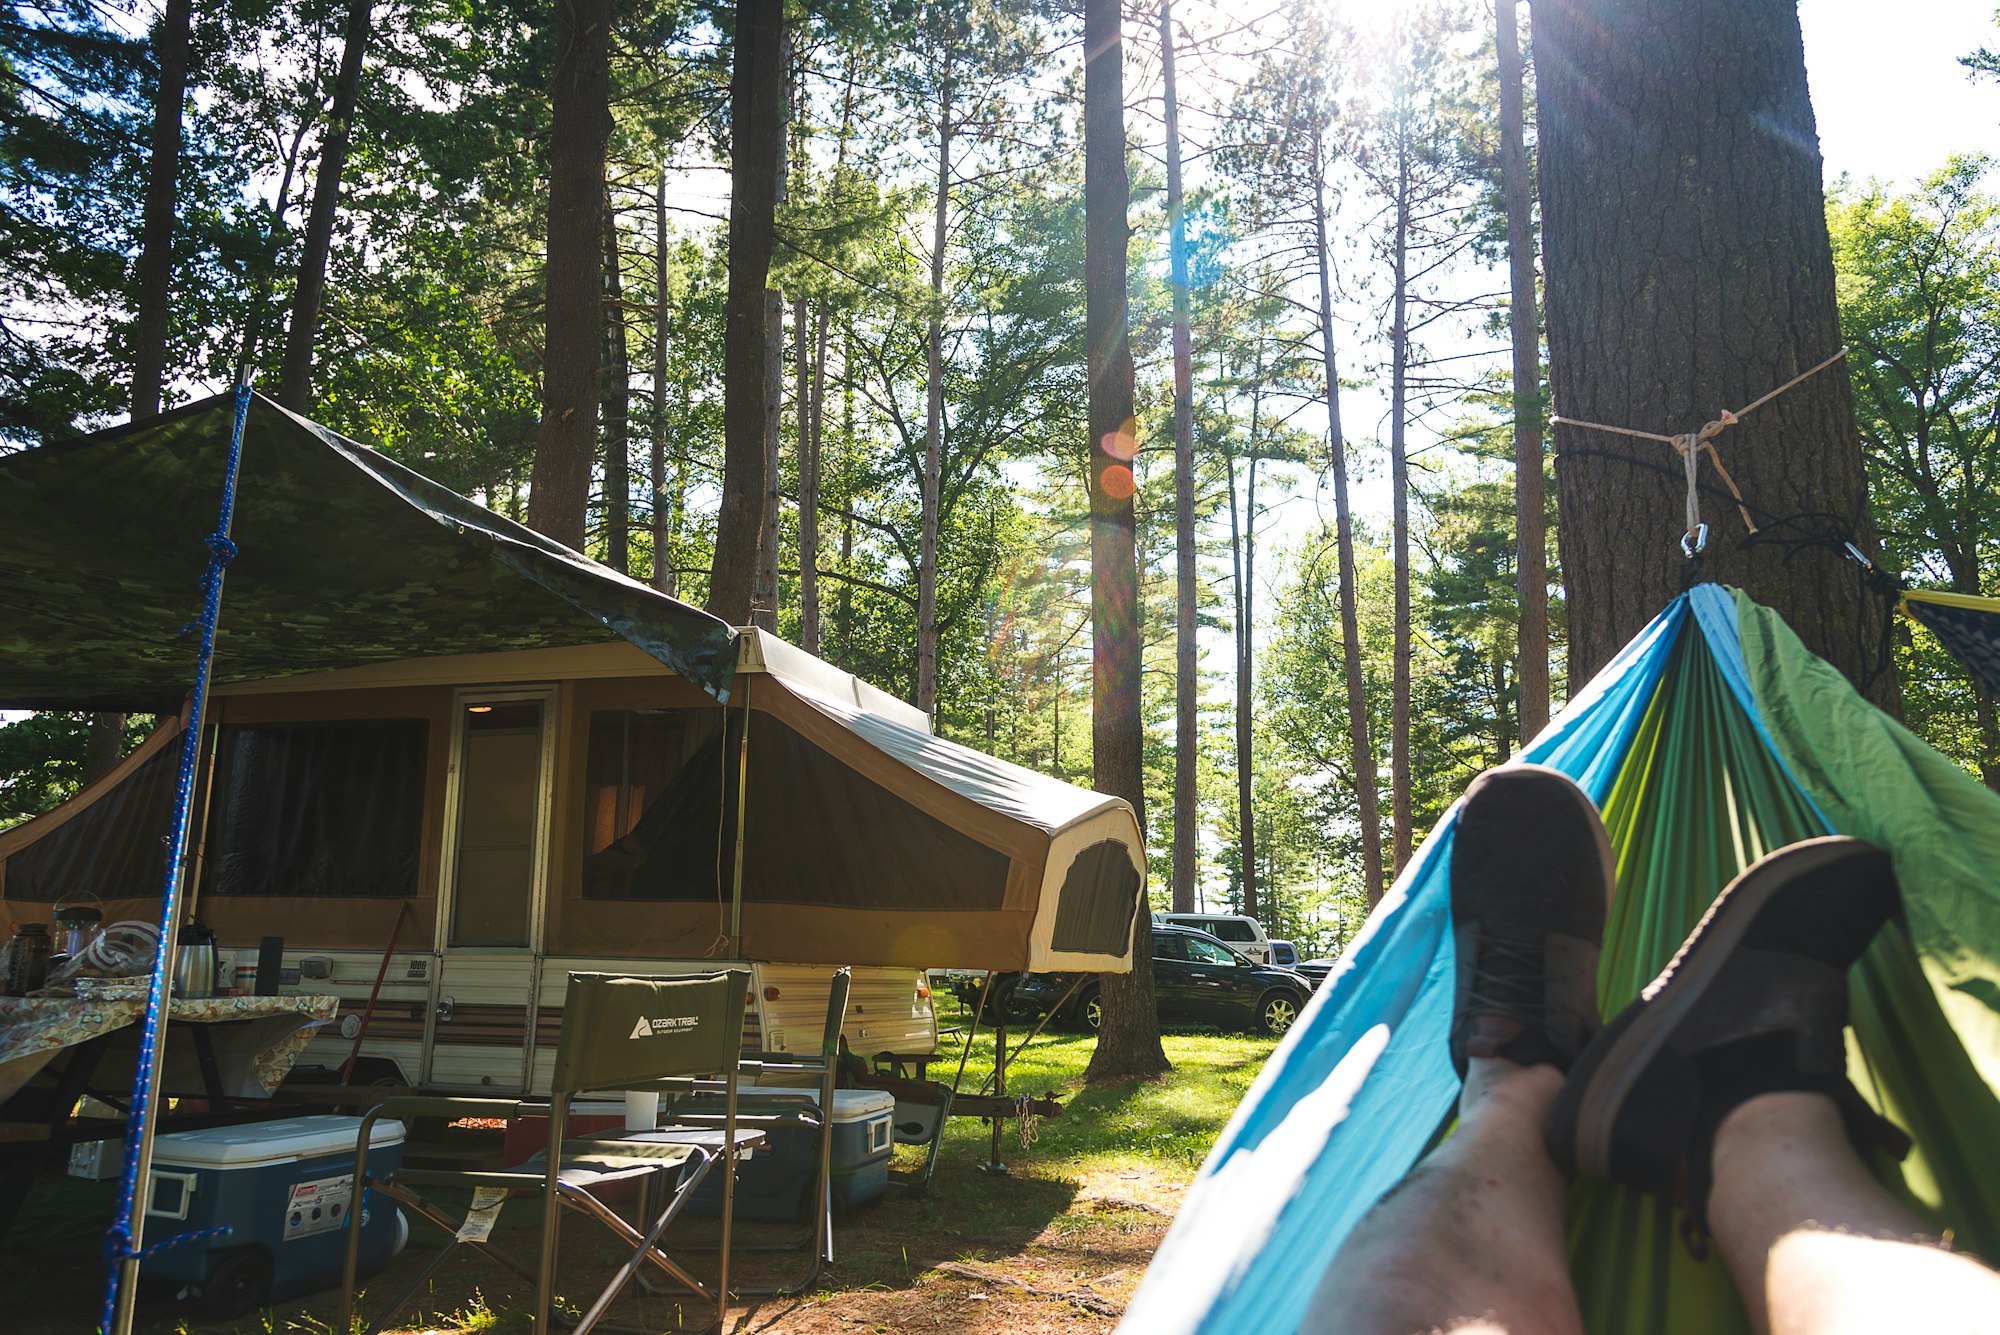 Nothing like camping.